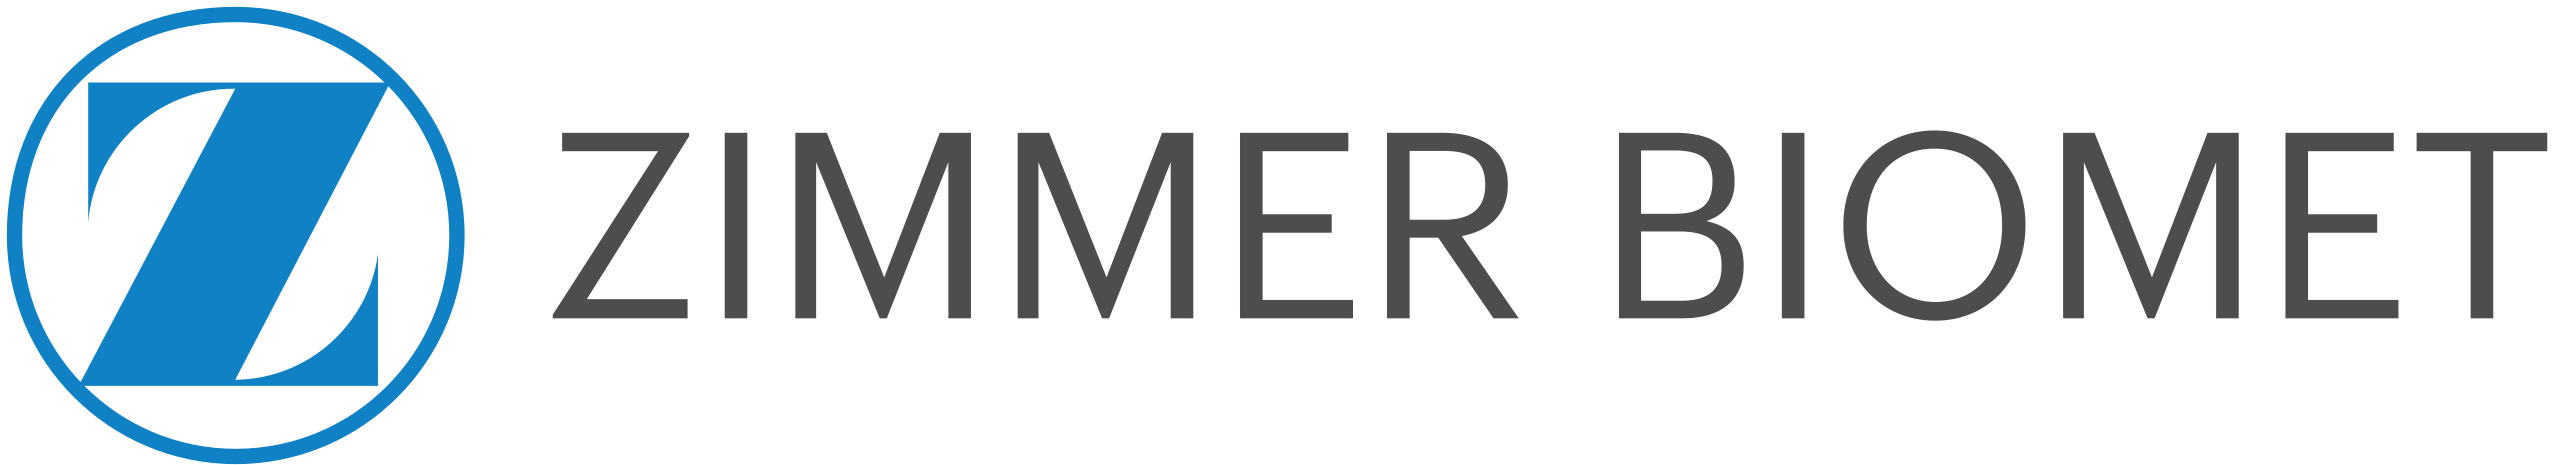 zimmer-biomet-logo